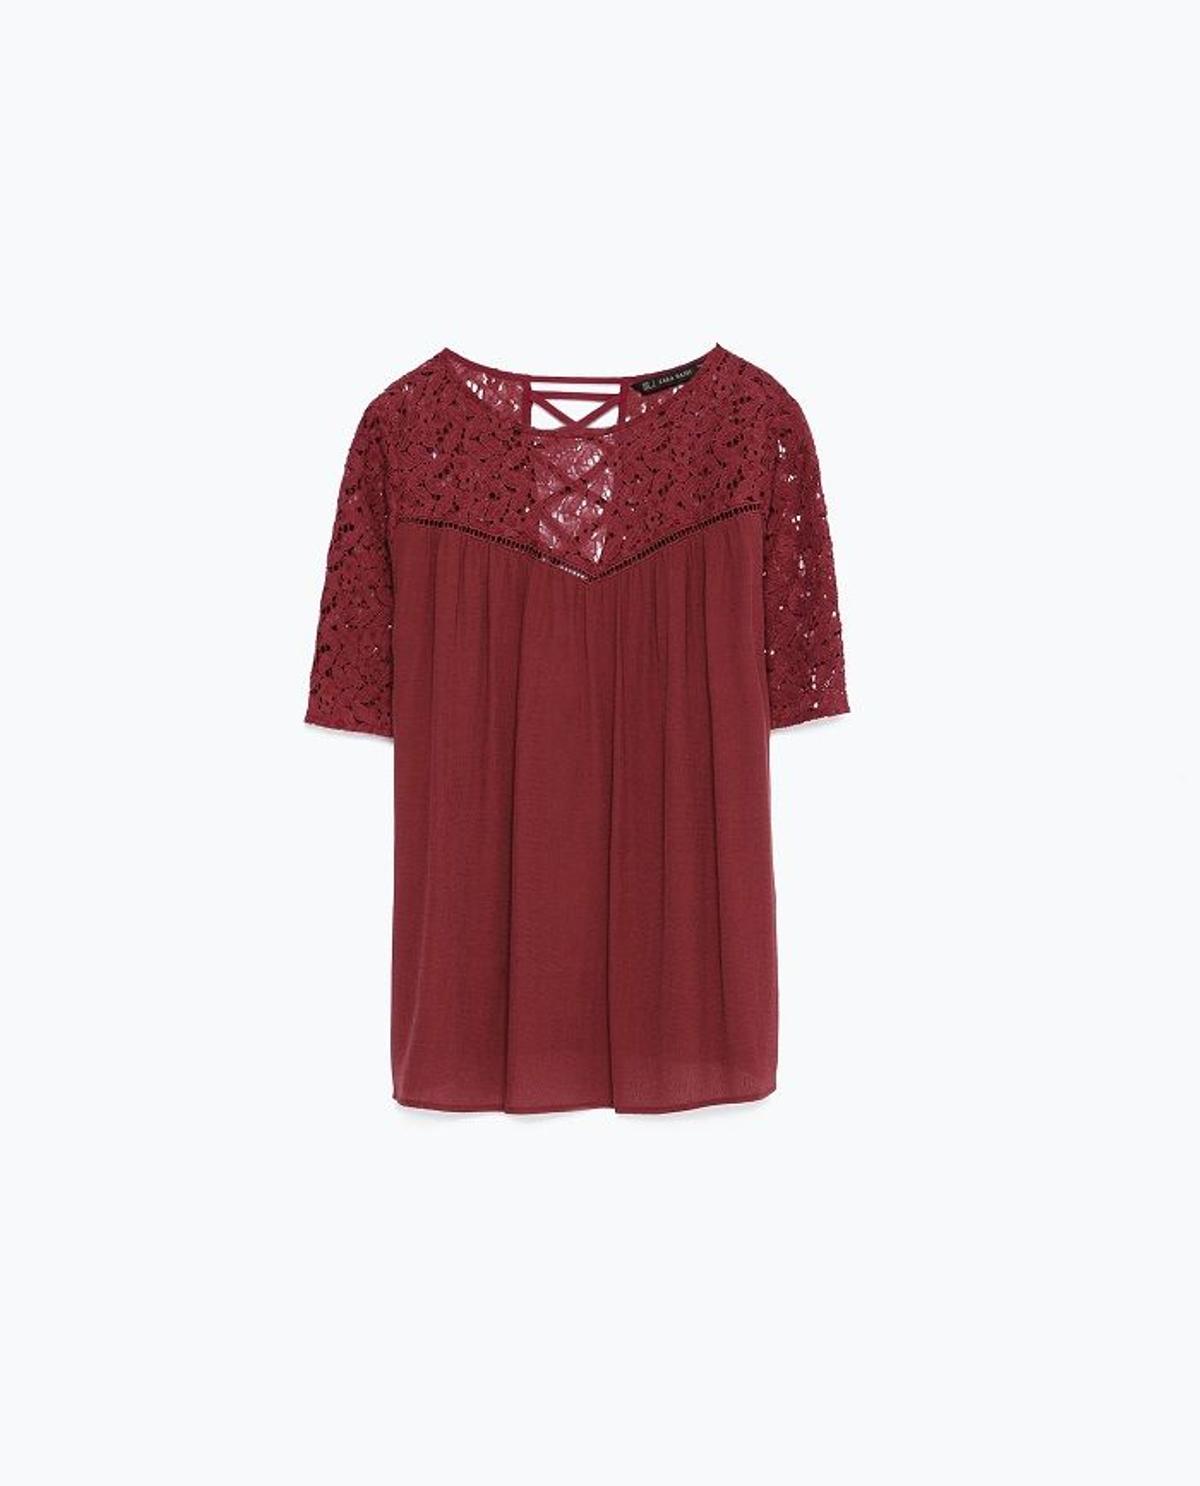 Básicos otoño 2015, blusa marsala de Zara